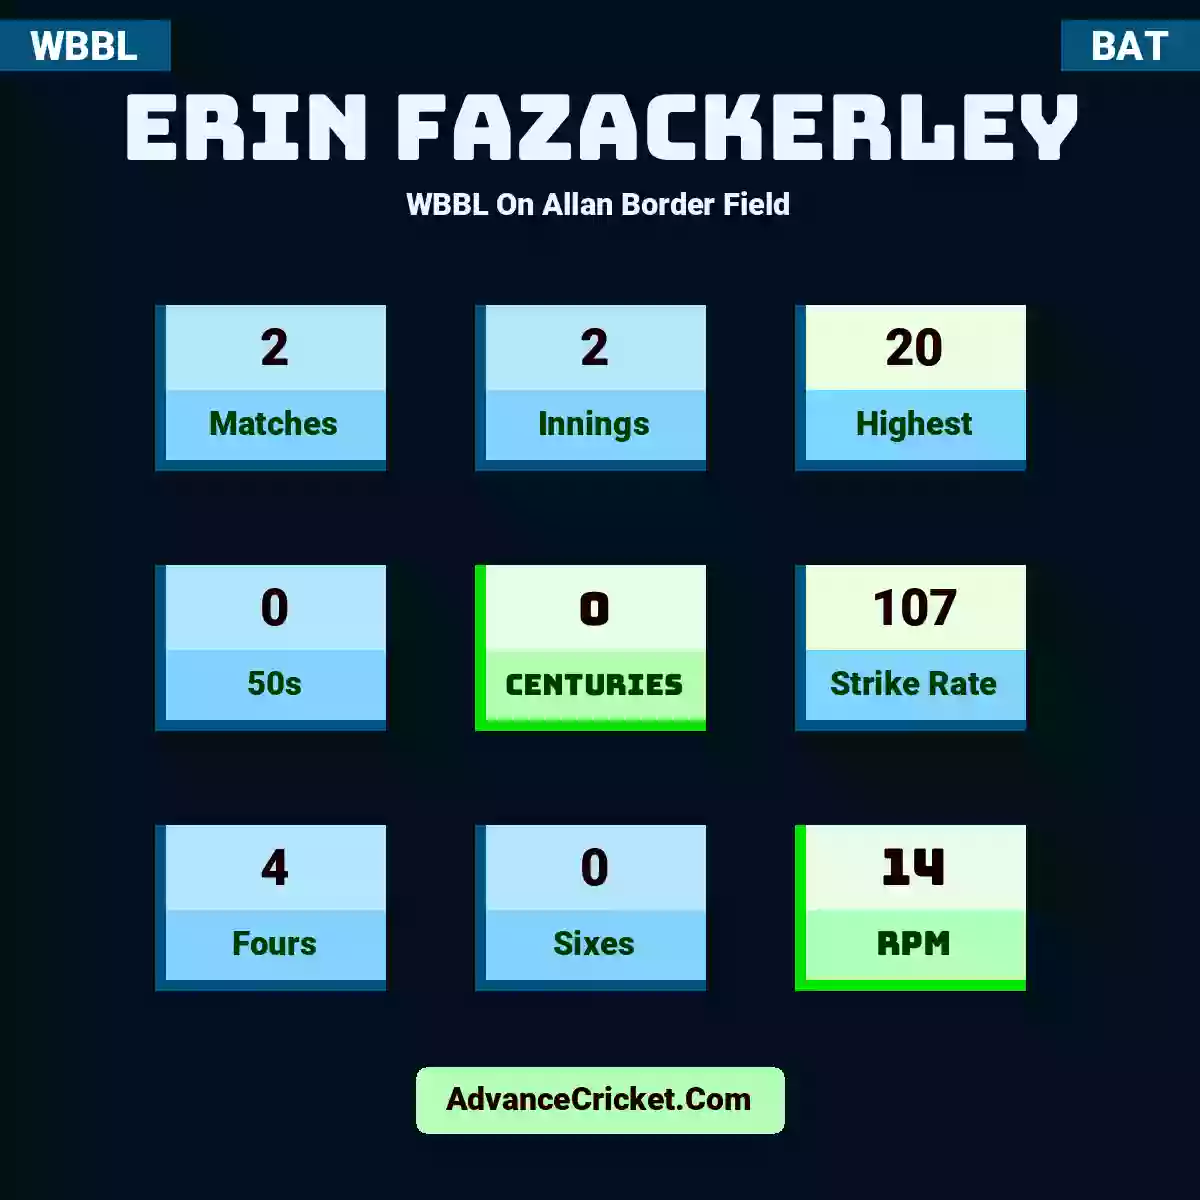 Erin Fazackerley WBBL  On Allan Border Field, Erin Fazackerley played 2 matches, scored 20 runs as highest, 0 half-centuries, and 0 centuries, with a strike rate of 107. E.Fazackerley hit 4 fours and 0 sixes, with an RPM of 14.